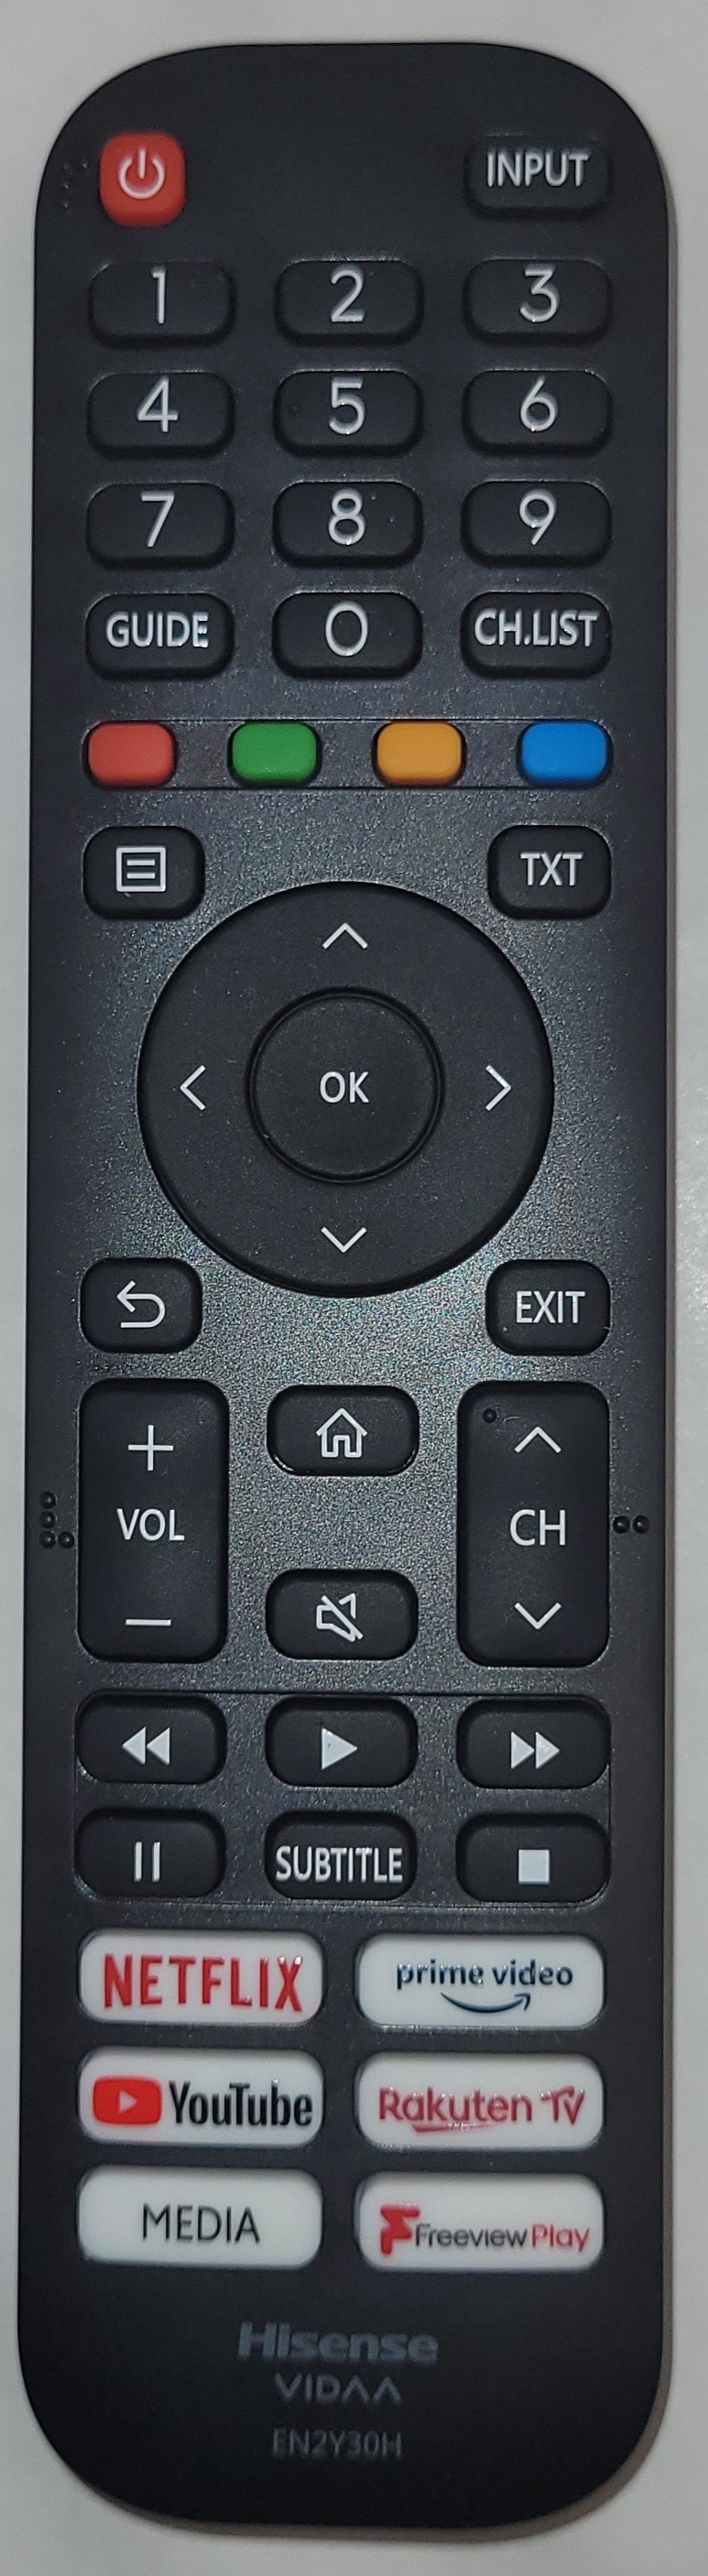 TV HISENSE remote control EN2Y30H Parts of TVs, gate air controls, etc.